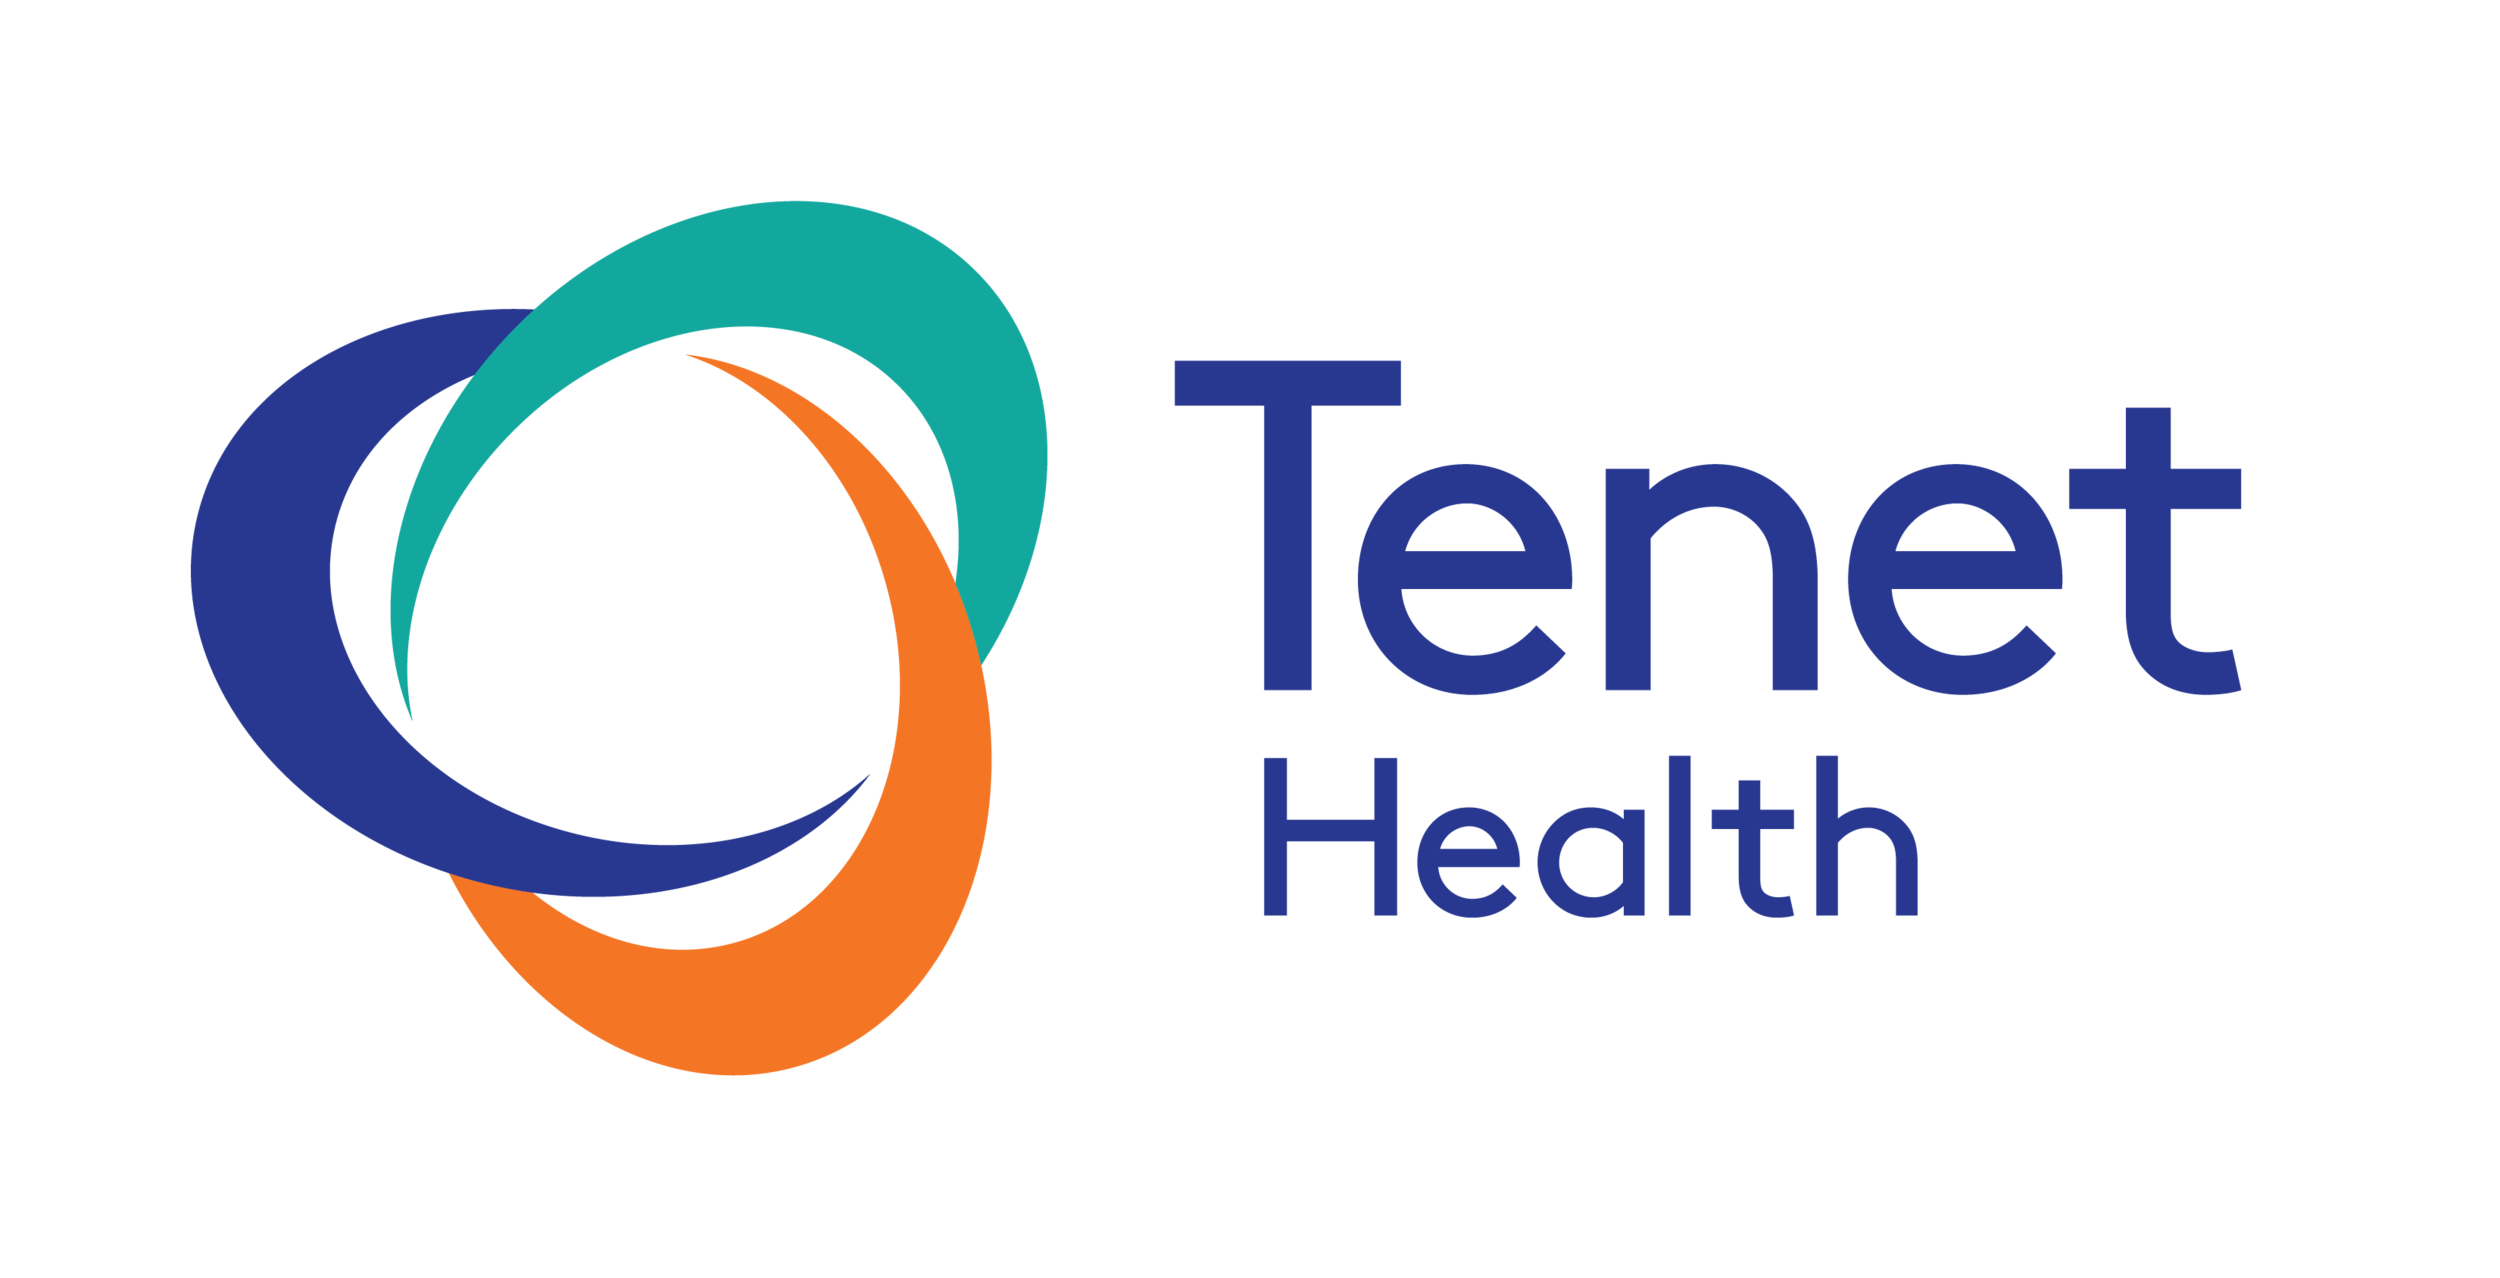 Tenet_Health_logo.png